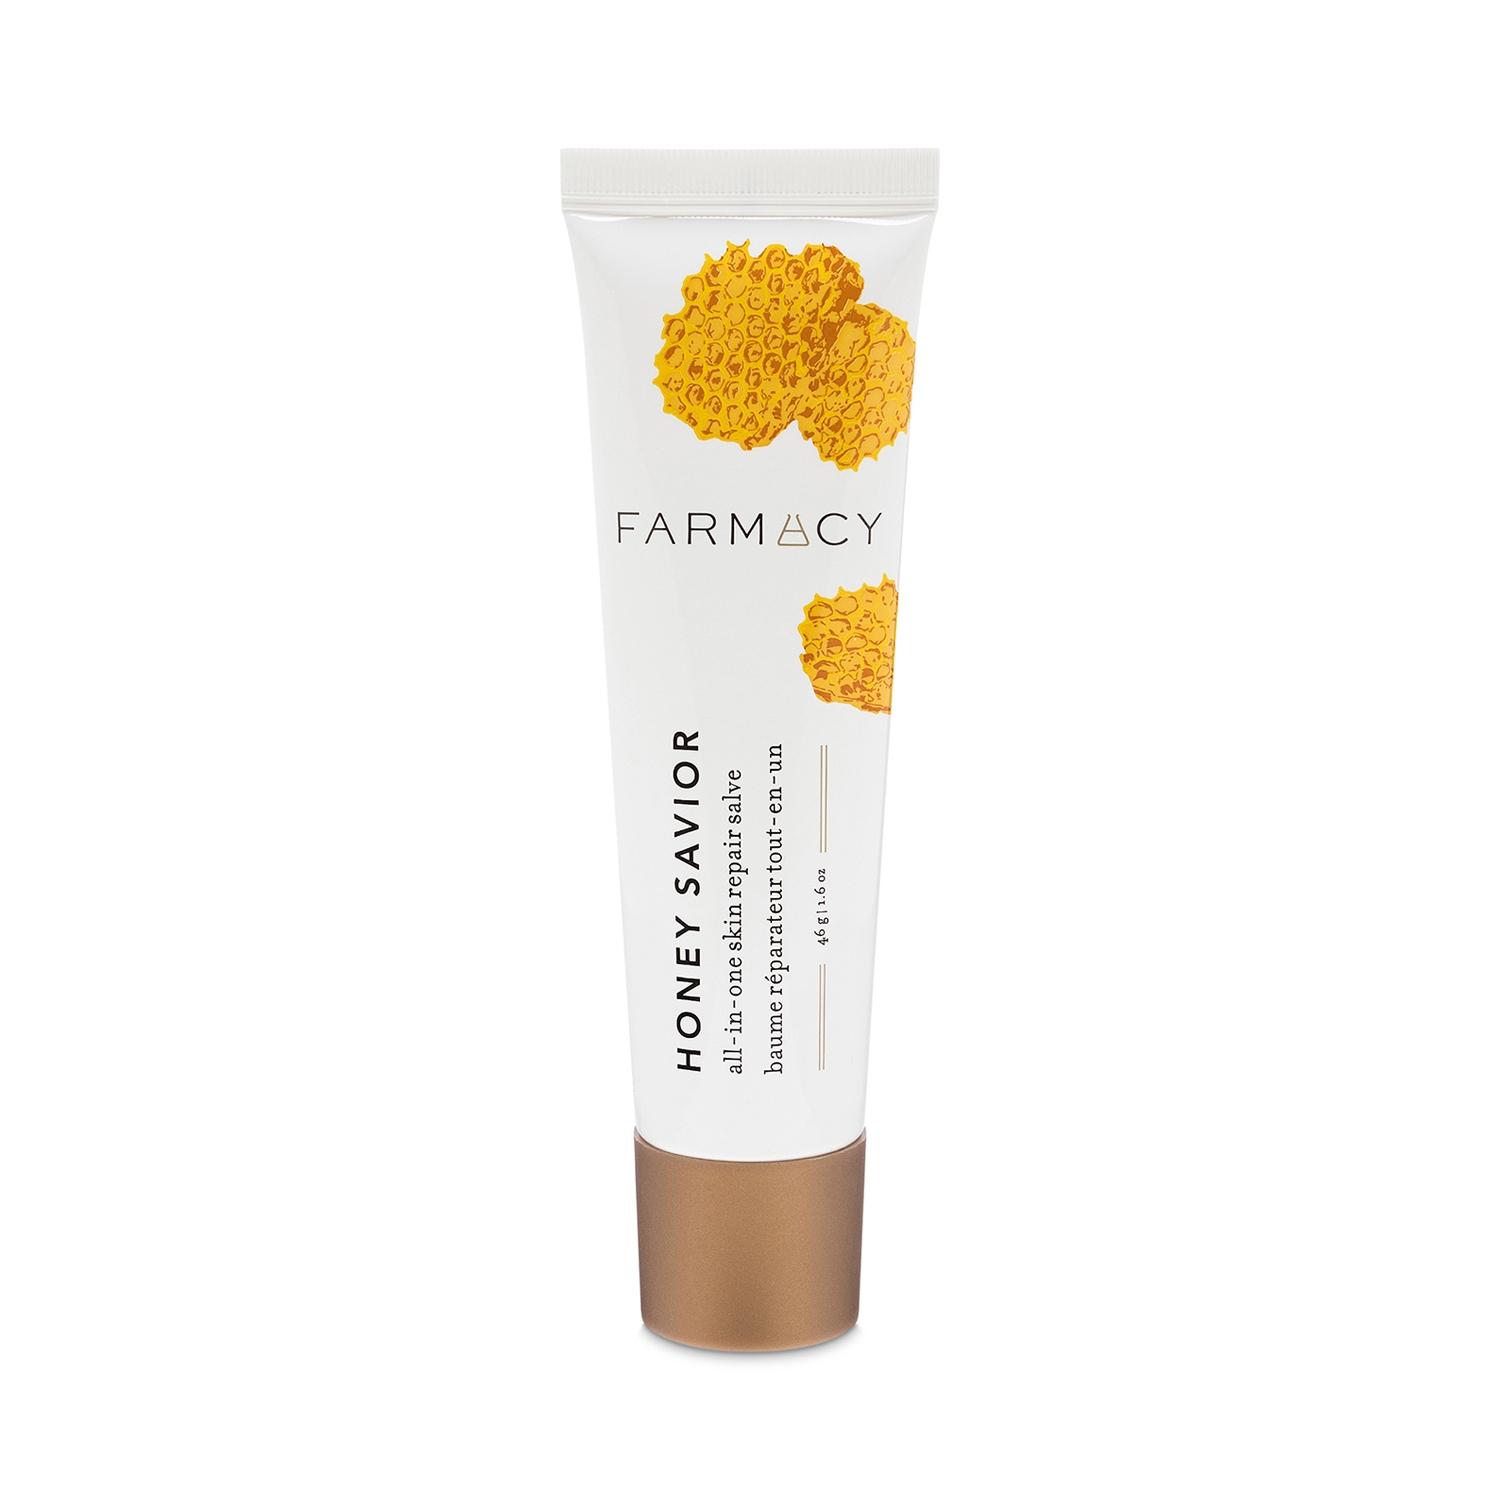 Farmacy Beauty Honey Savior All-In-One Skin Repair Salve (46g)